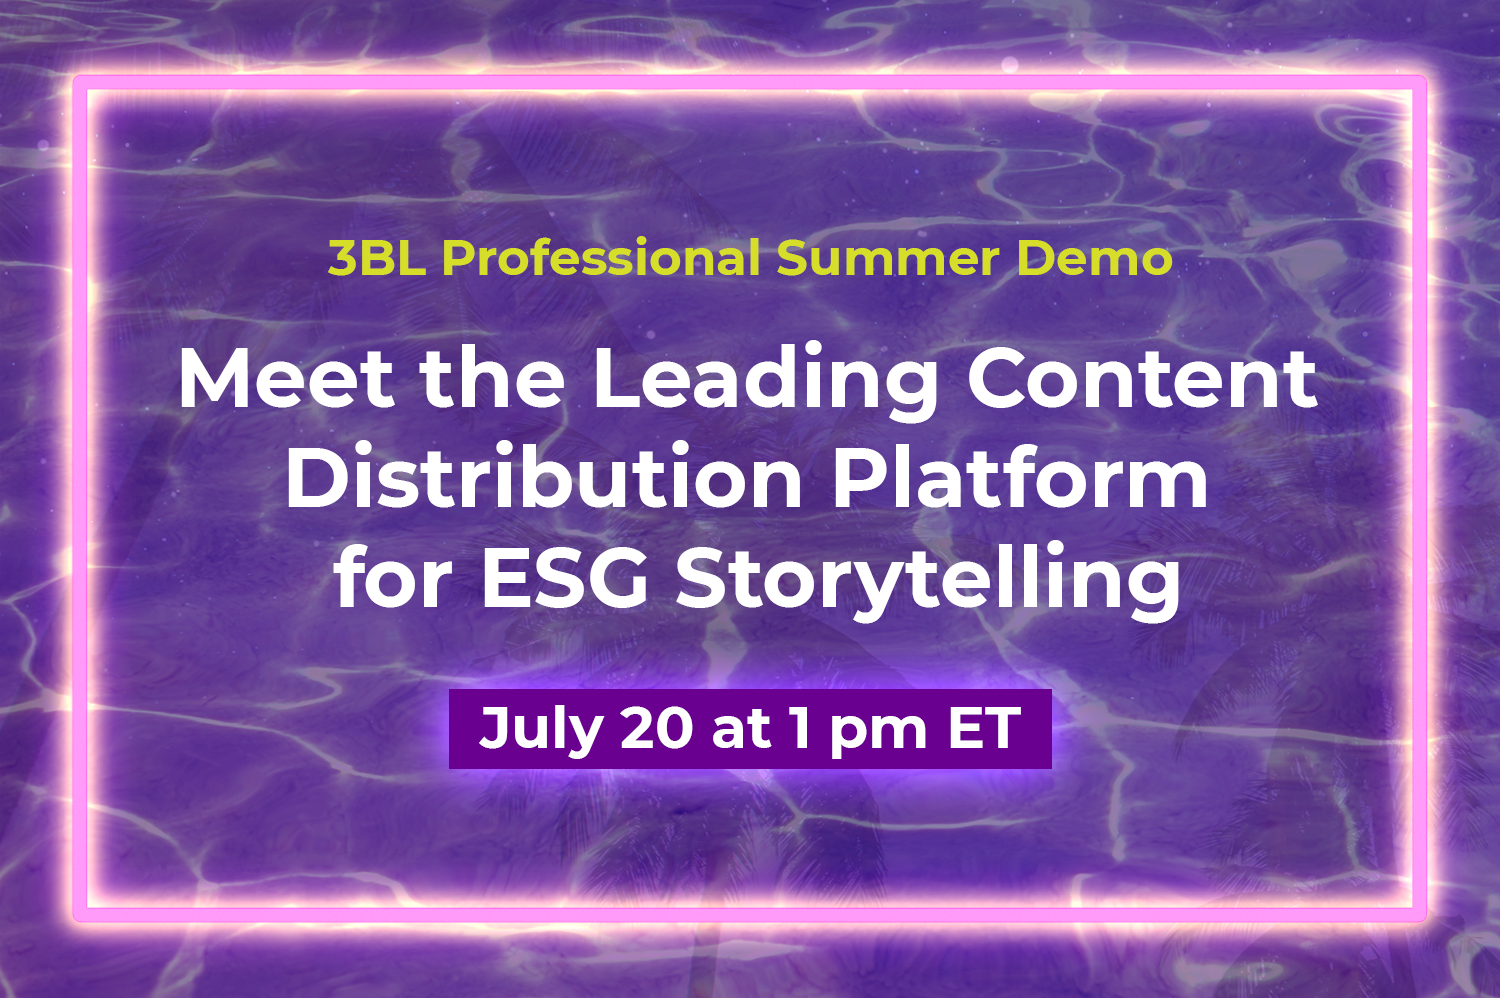 "Meet the Leading Content Distribution Platform for ESG Storytelling" 